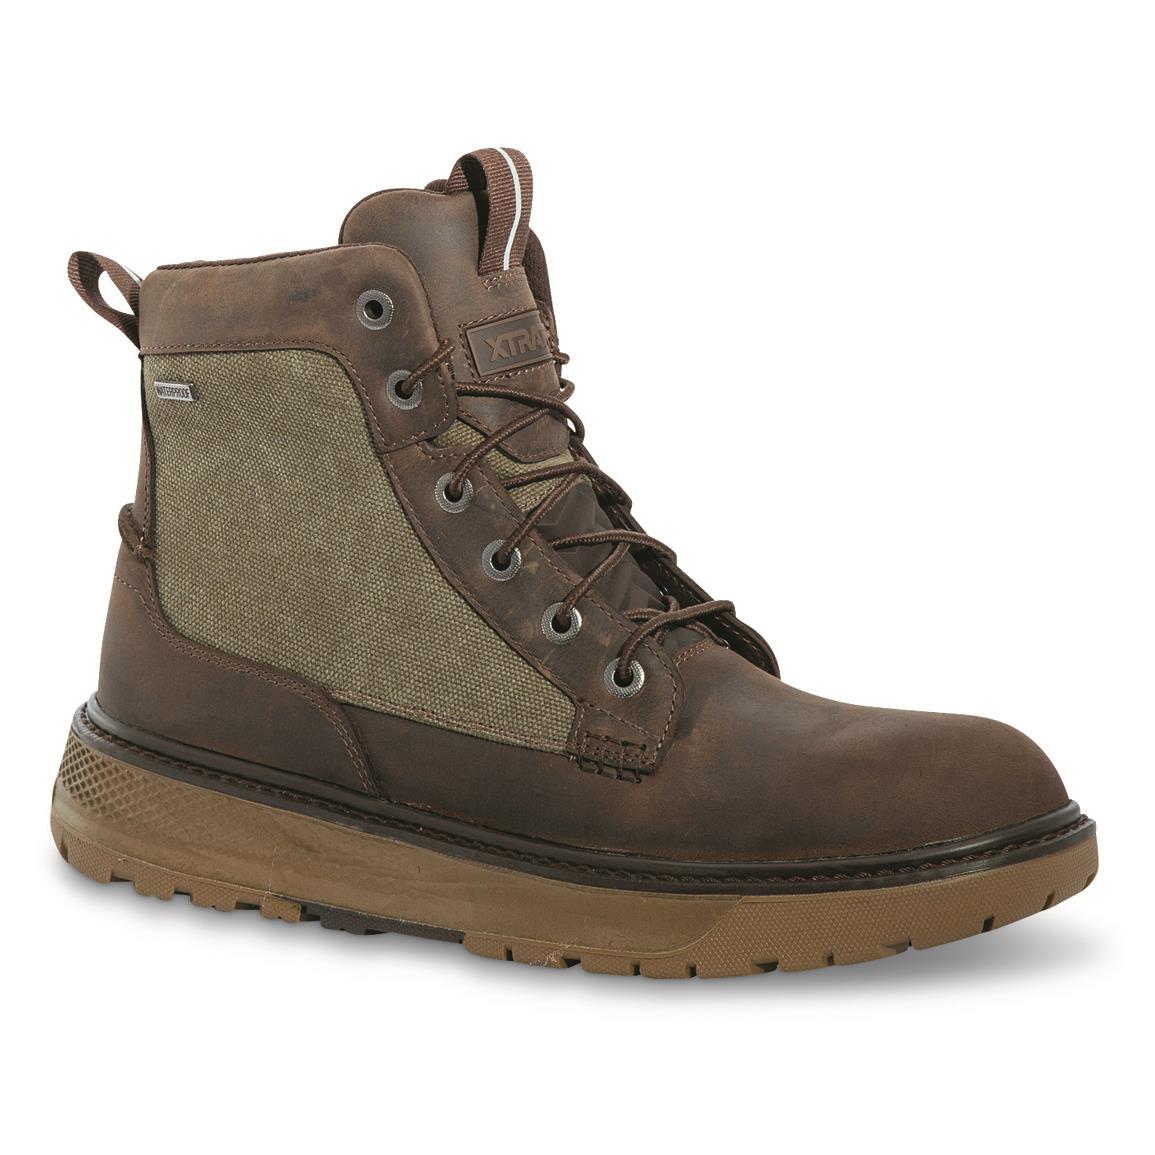 XTRATUF Men's Bristol Bay Waterproof Leather/Canvas Boots, Brown